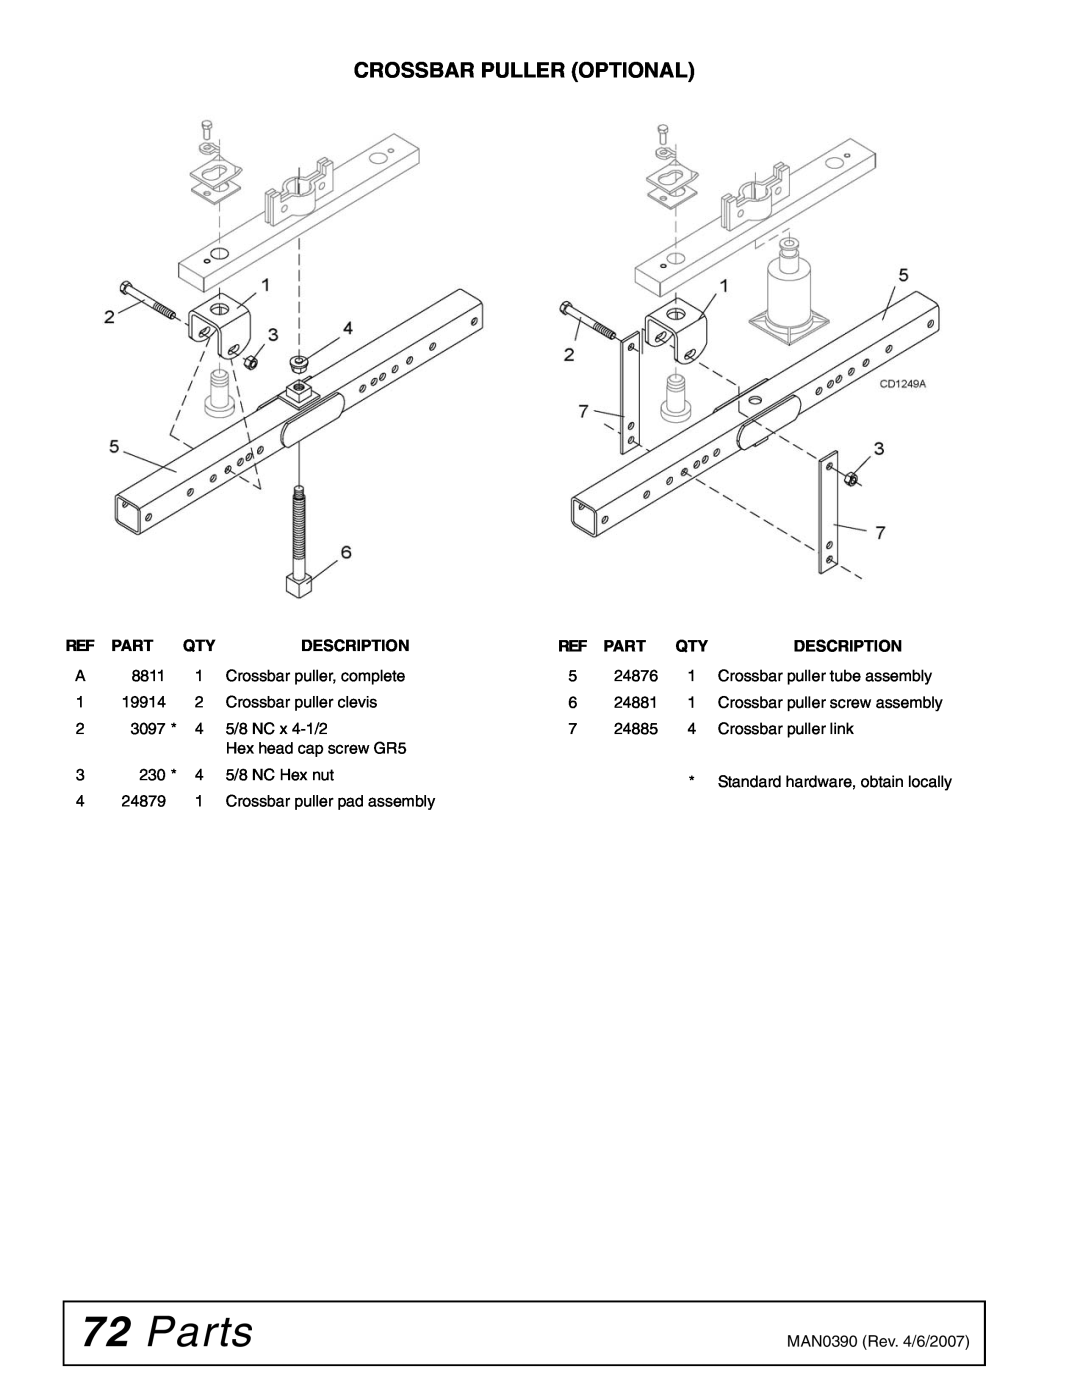 Woods Equipment DS96, DS120 manual Parts, Crossbar Puller Optional, Description 